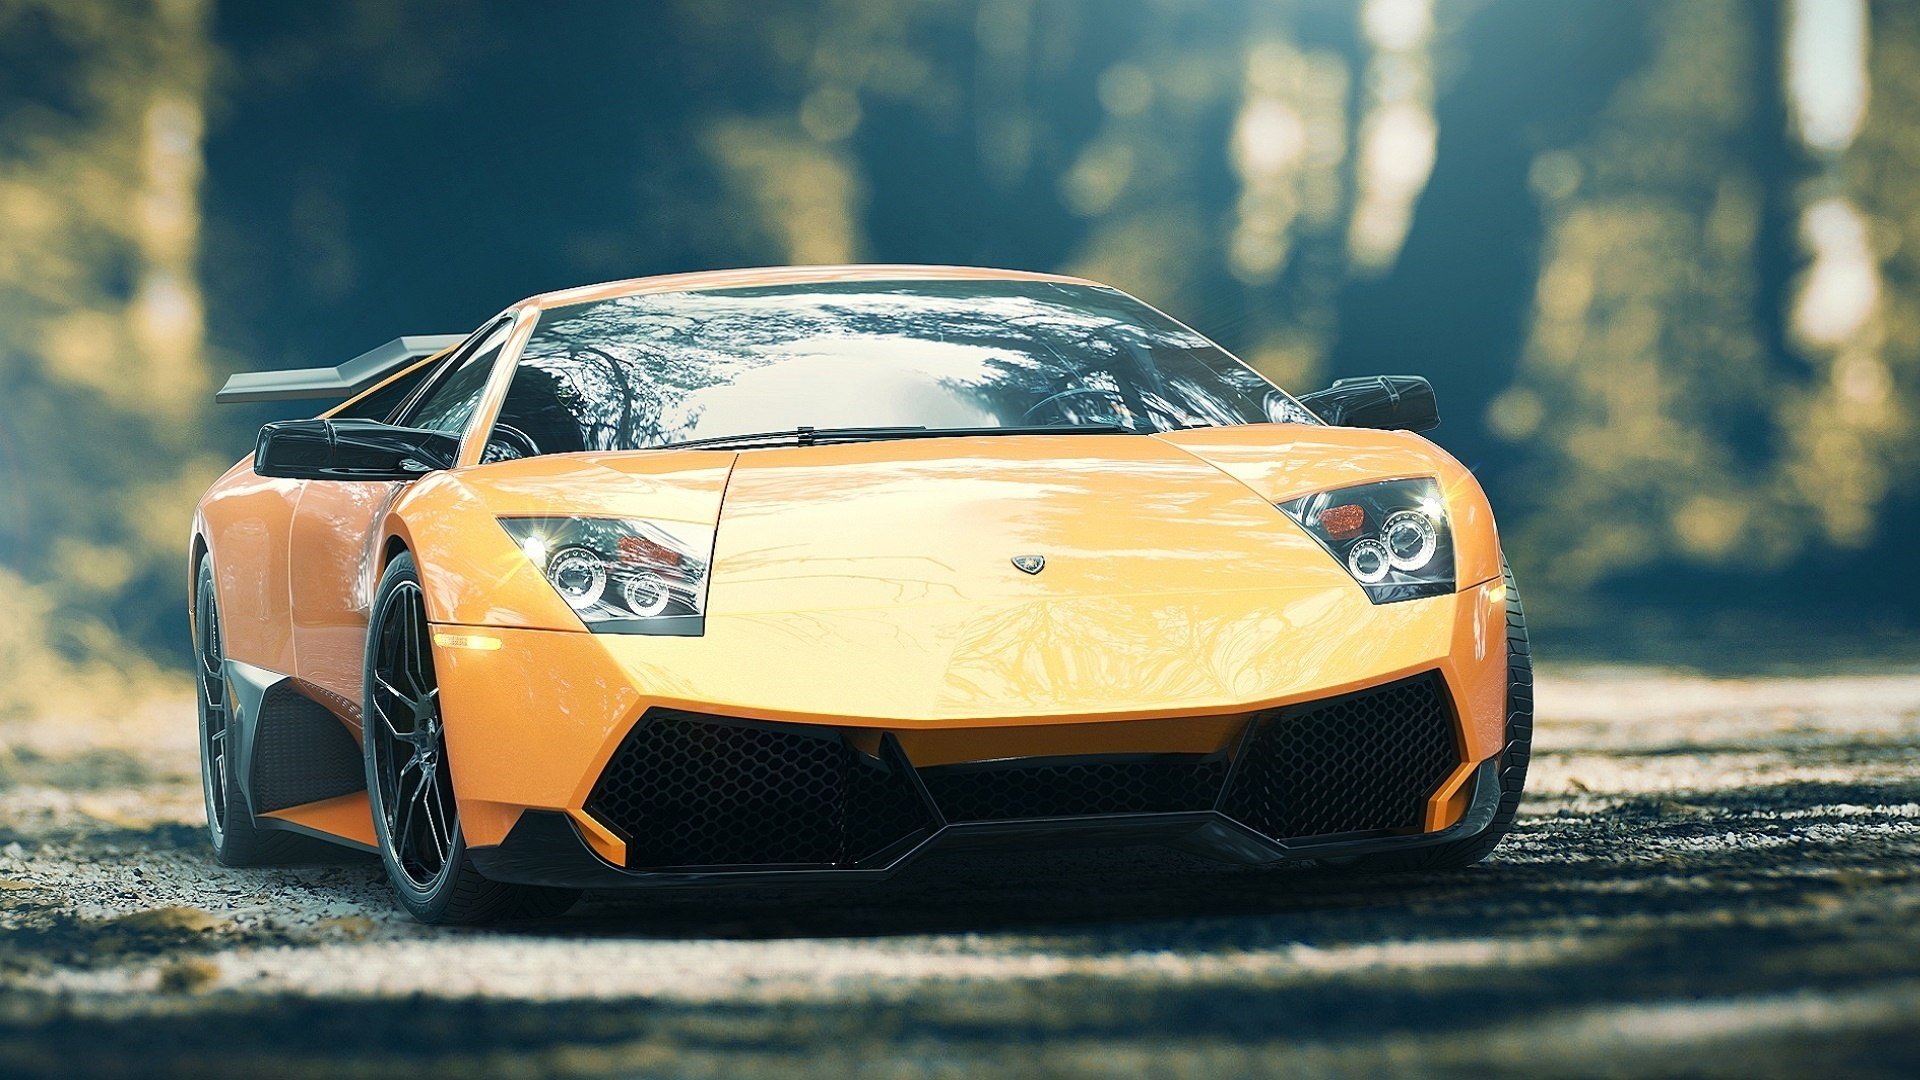 Download full hd Lamborghini Murcielago PC background ID:155277 for free